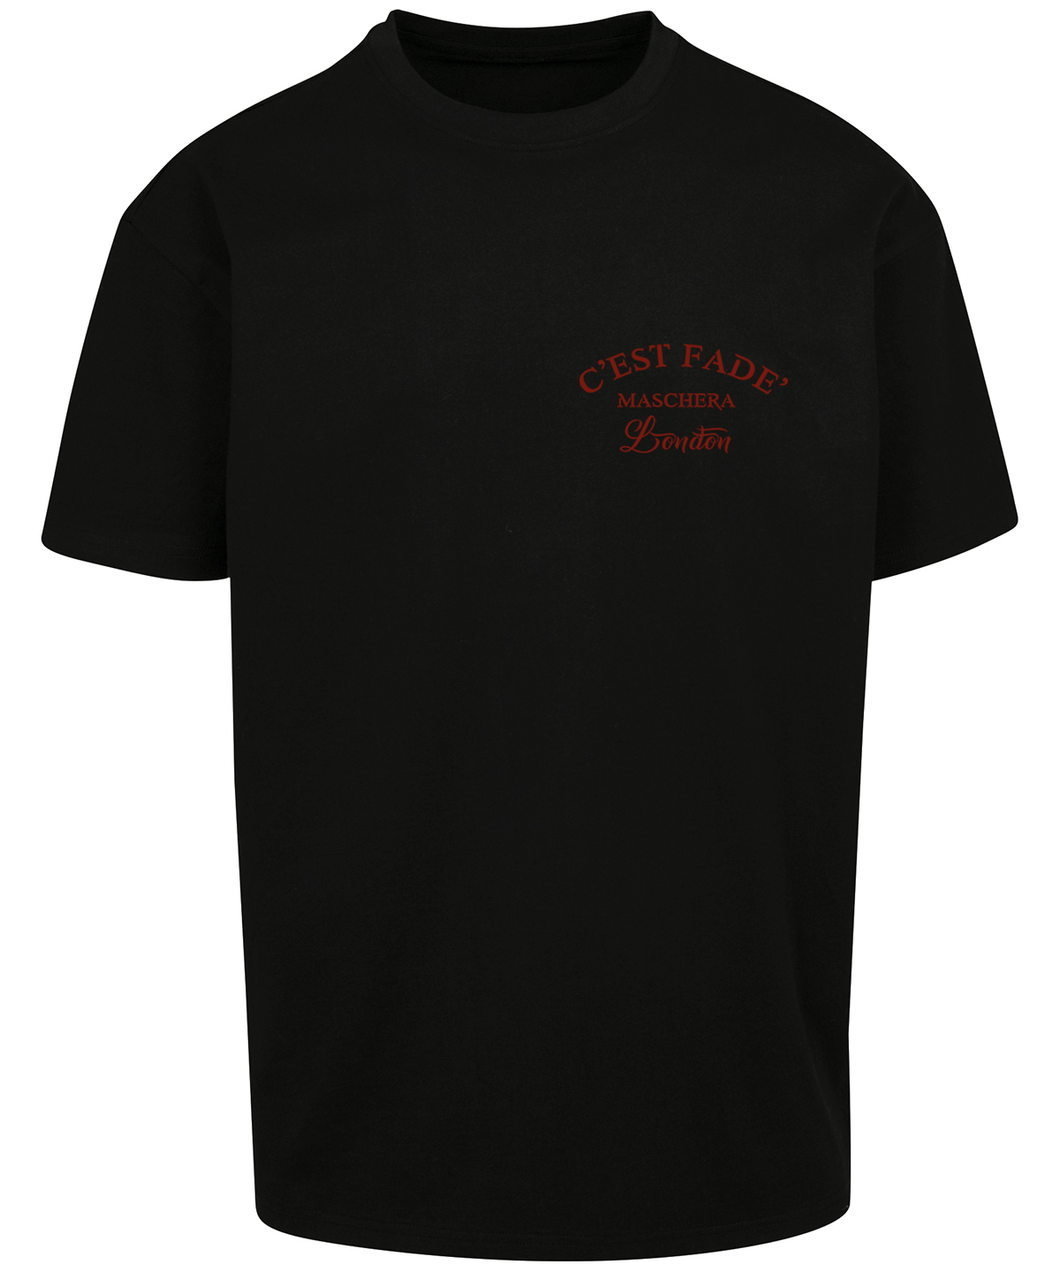 Classic logo print T-shirt - red on black tee